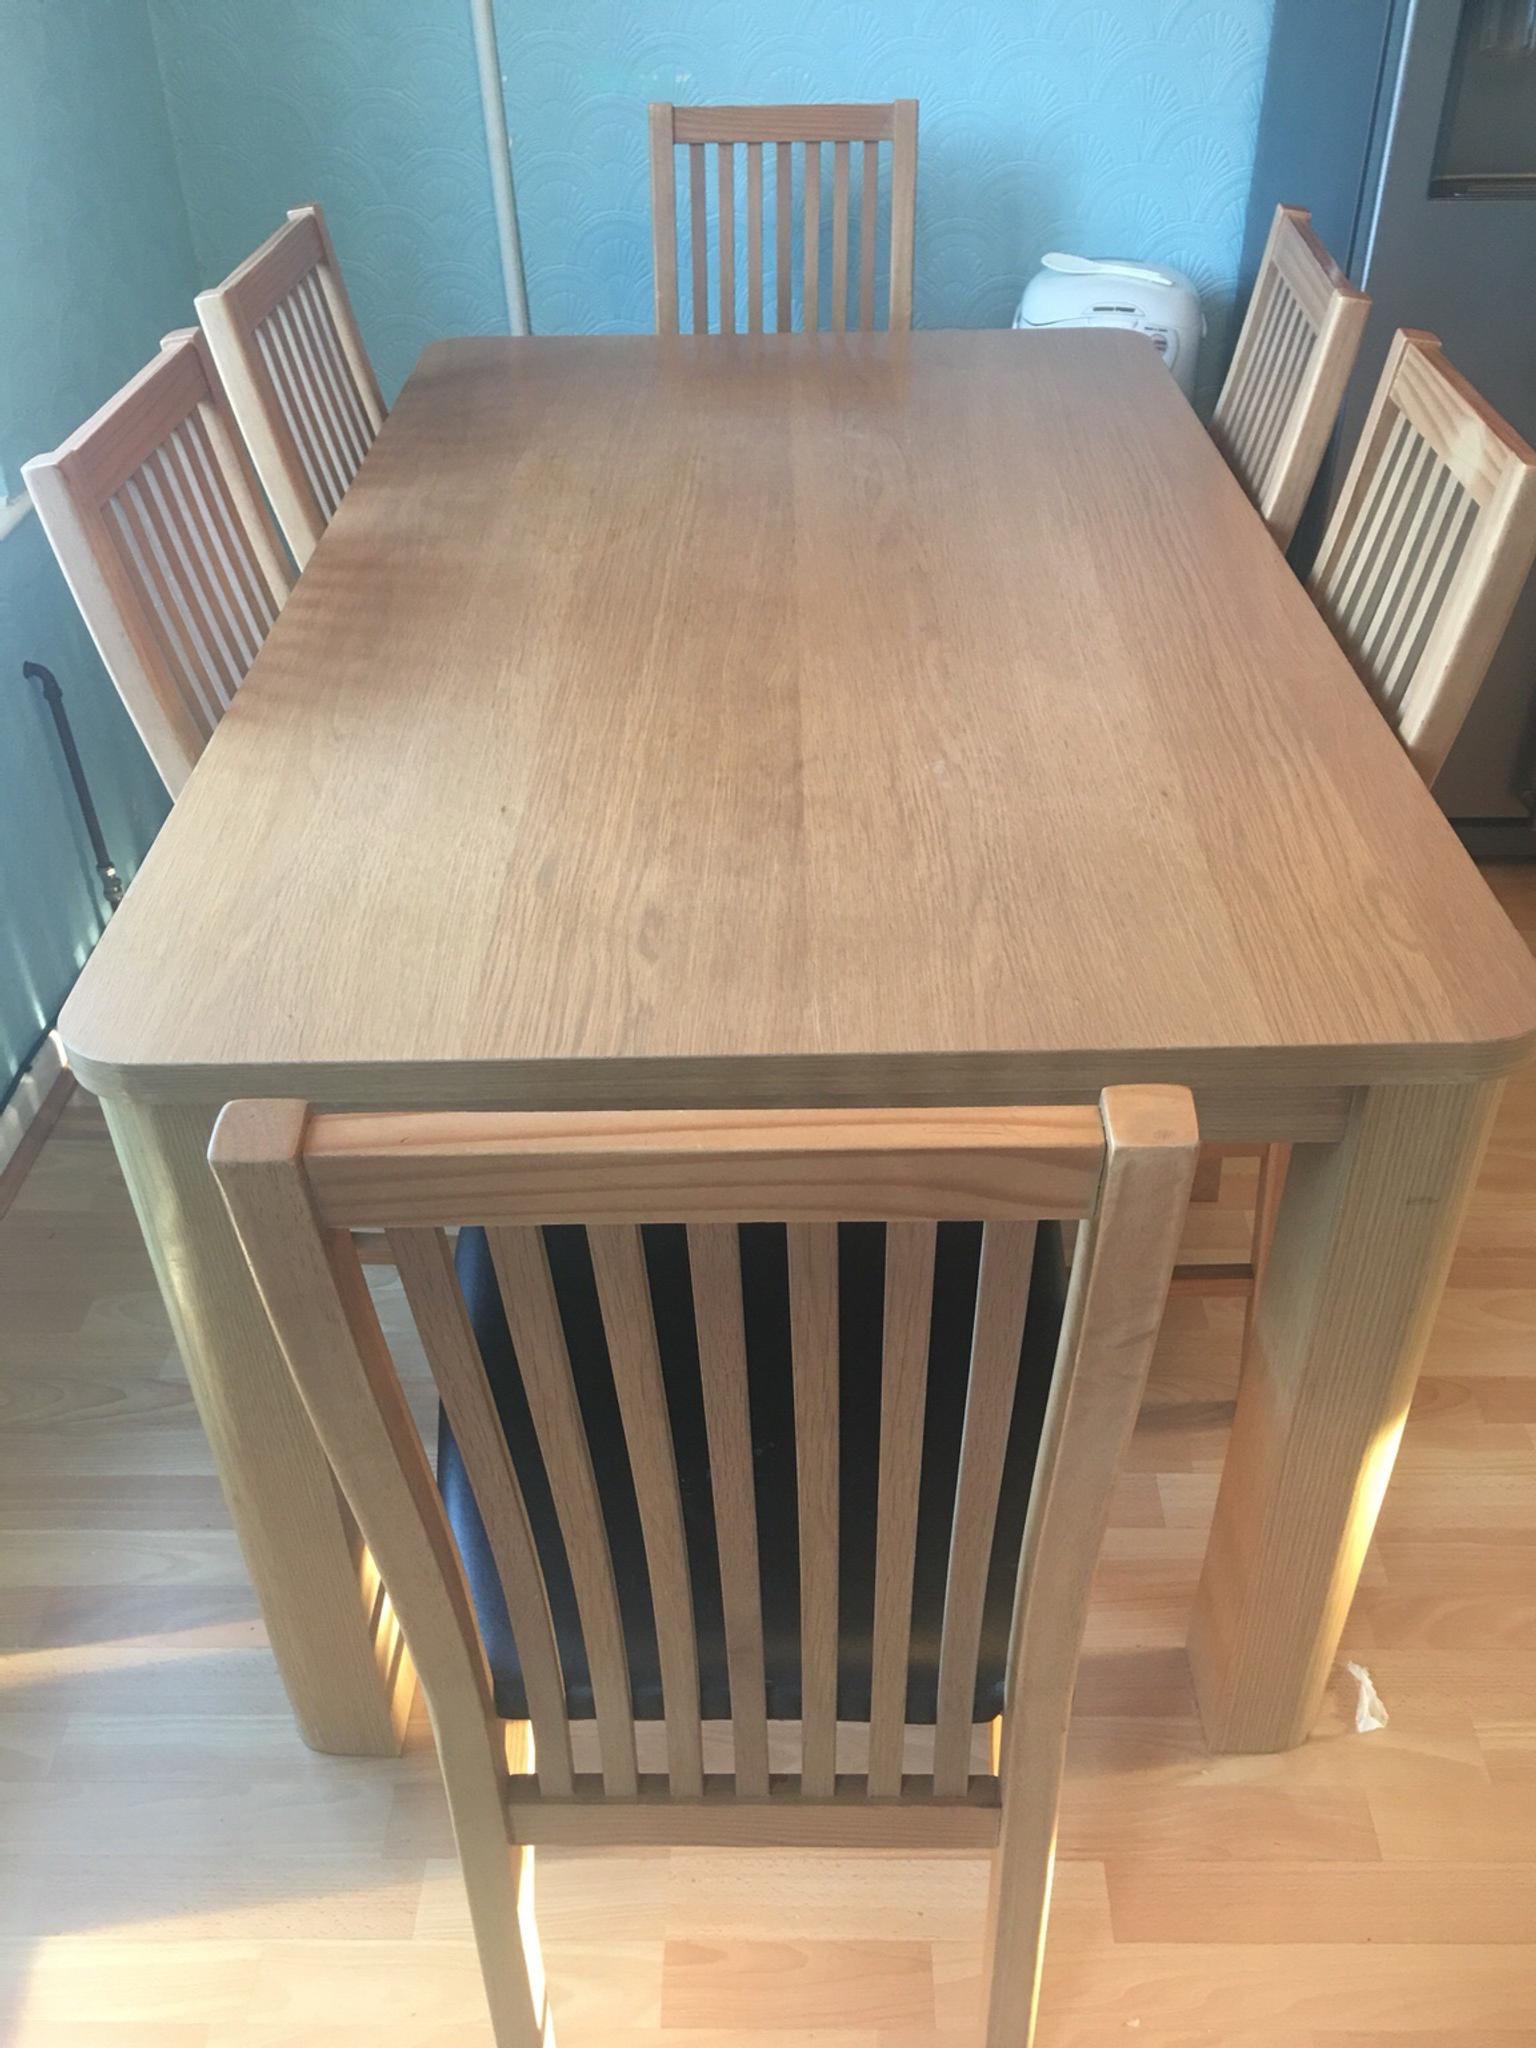 Wood Dining Table And 6 Chairs In De21 Derby Fur 39 00 Zum Verkauf Shpock De